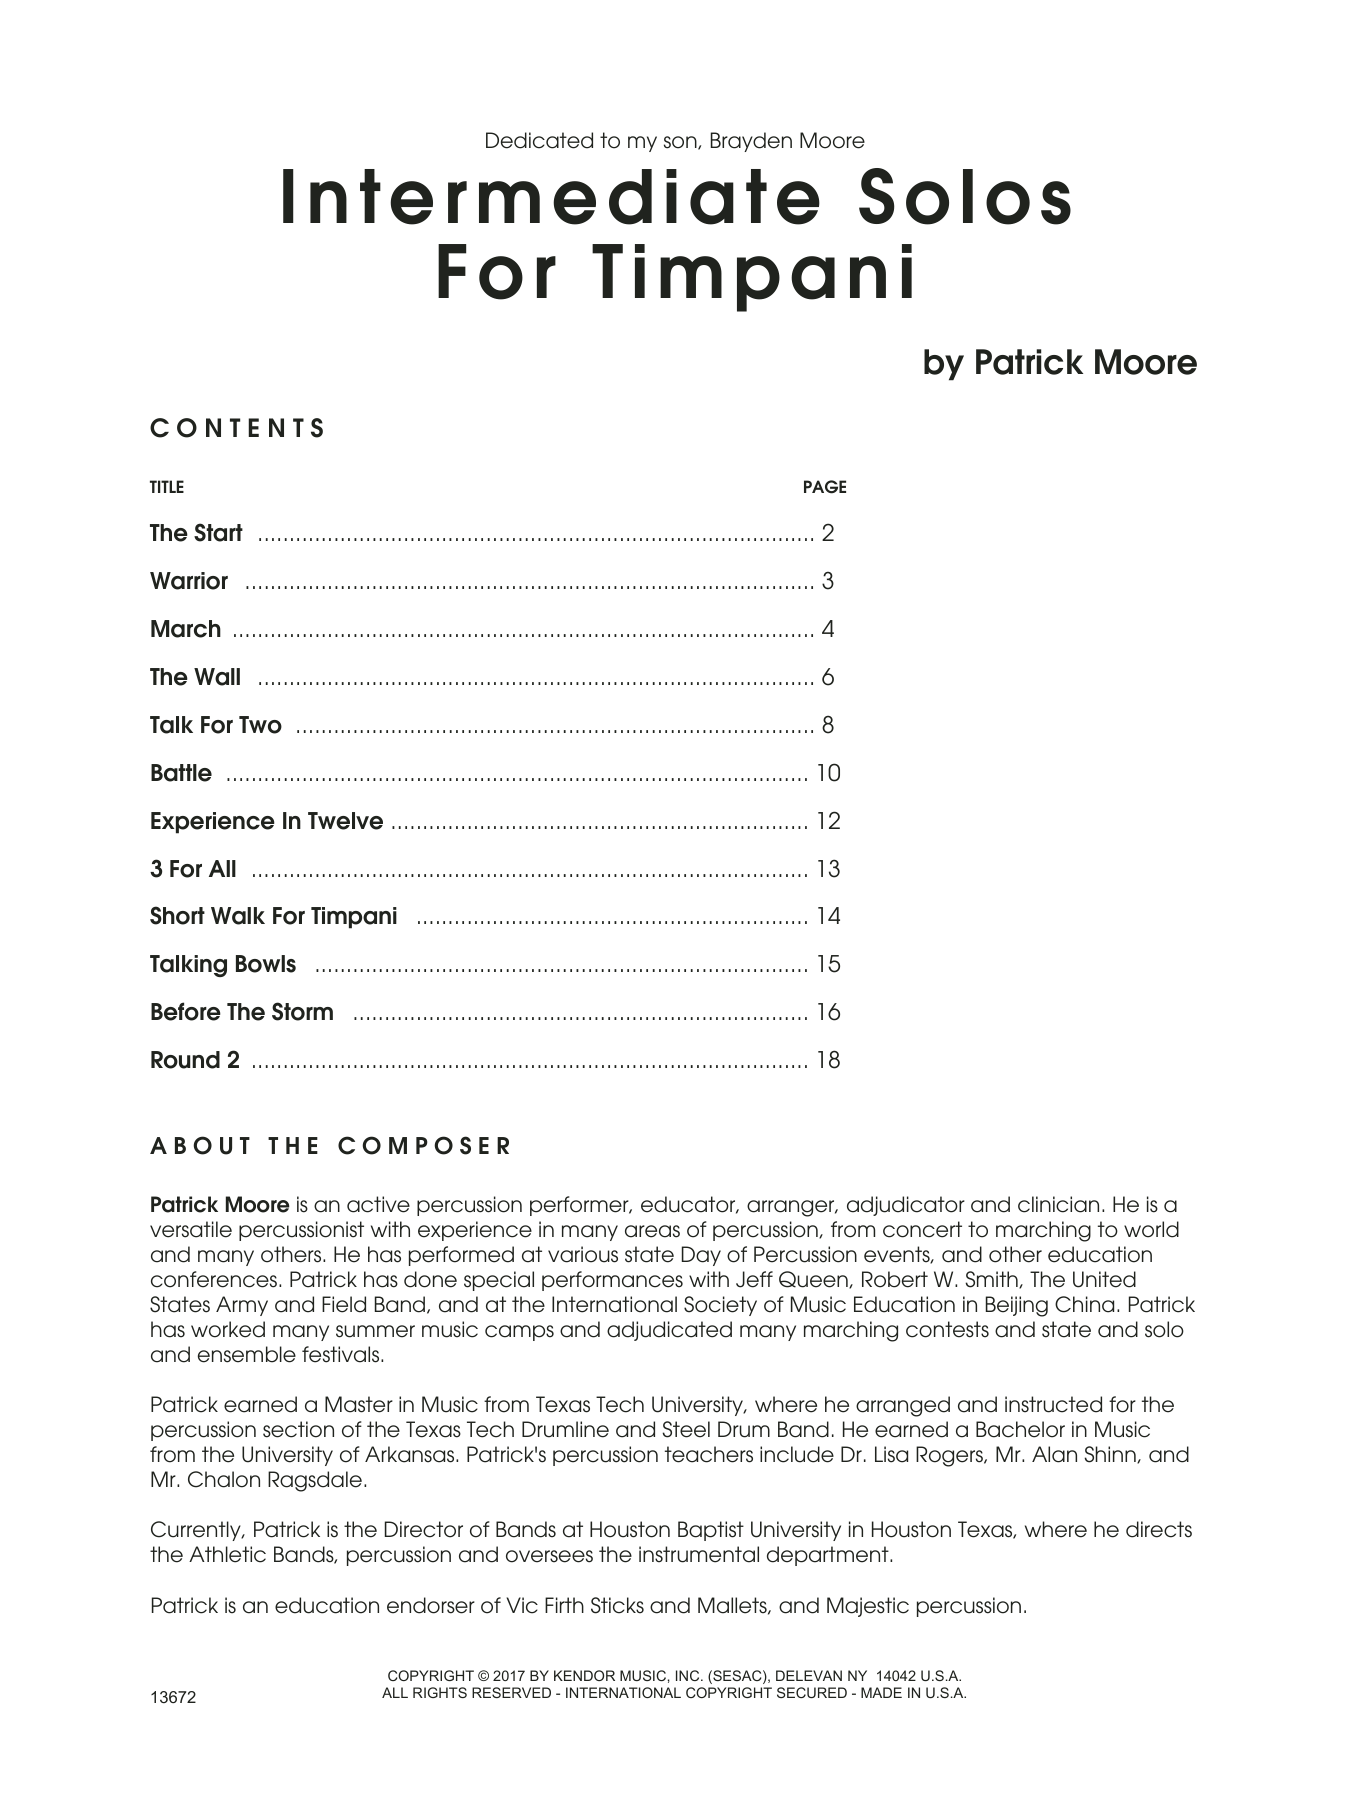 Download Patrick Moore Intermediate Solos For Timpani Sheet Music